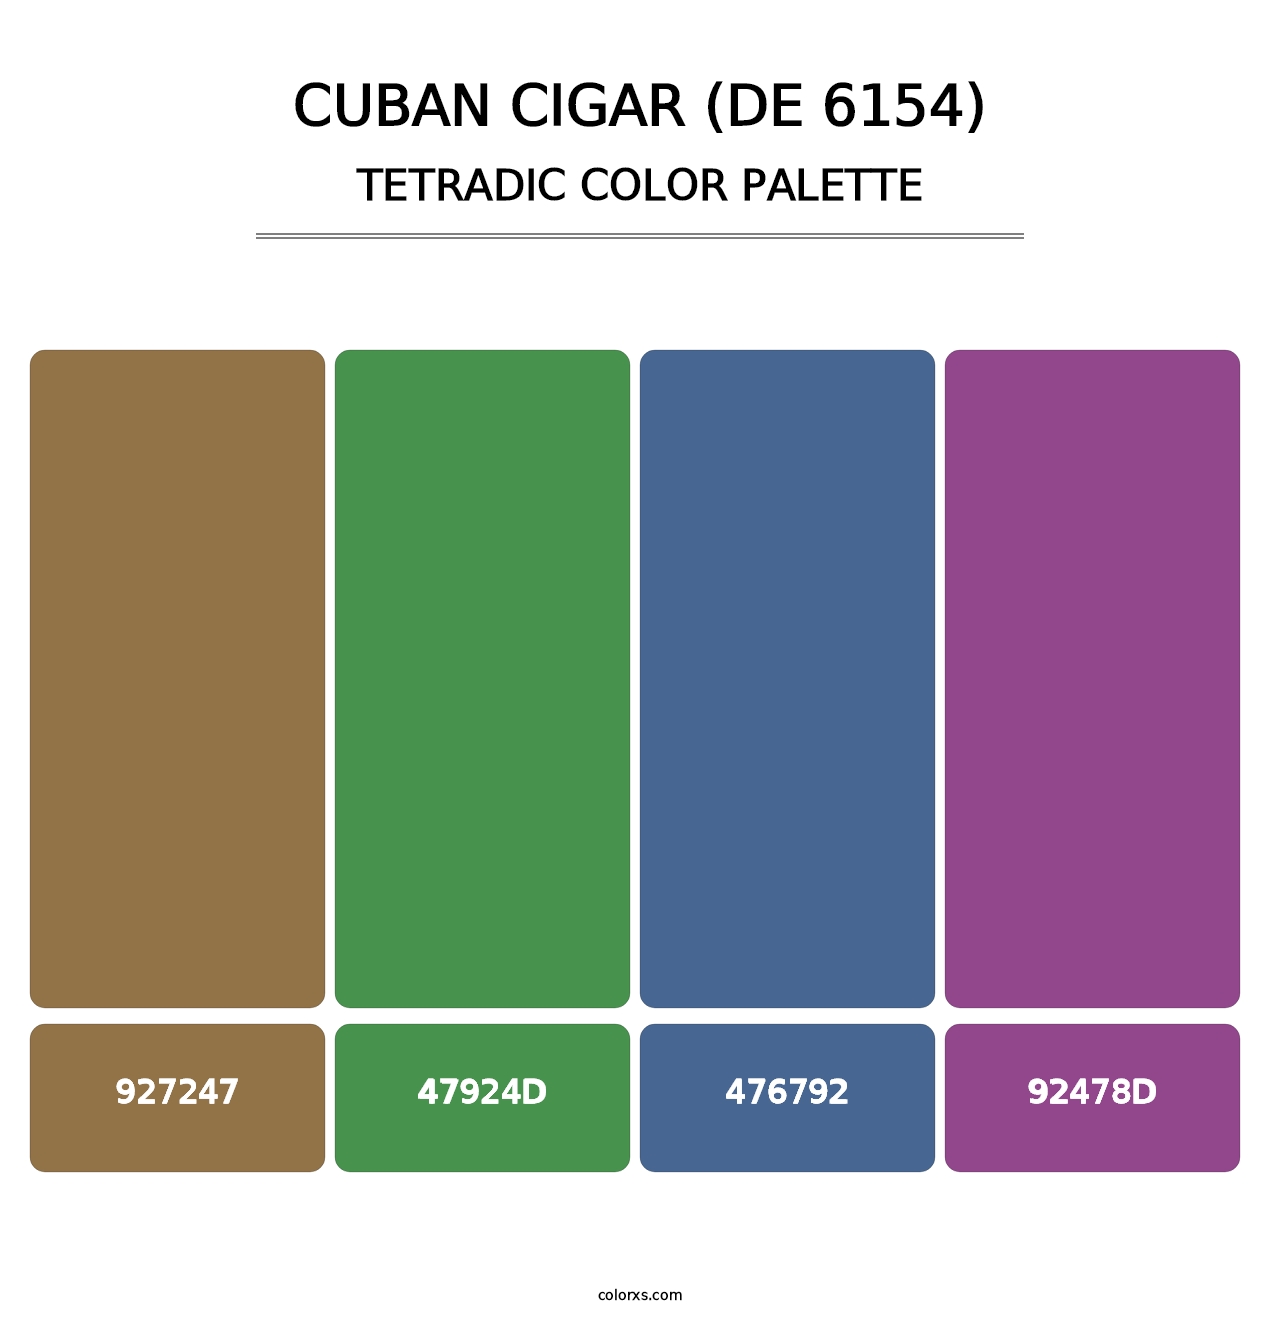 Cuban Cigar (DE 6154) - Tetradic Color Palette